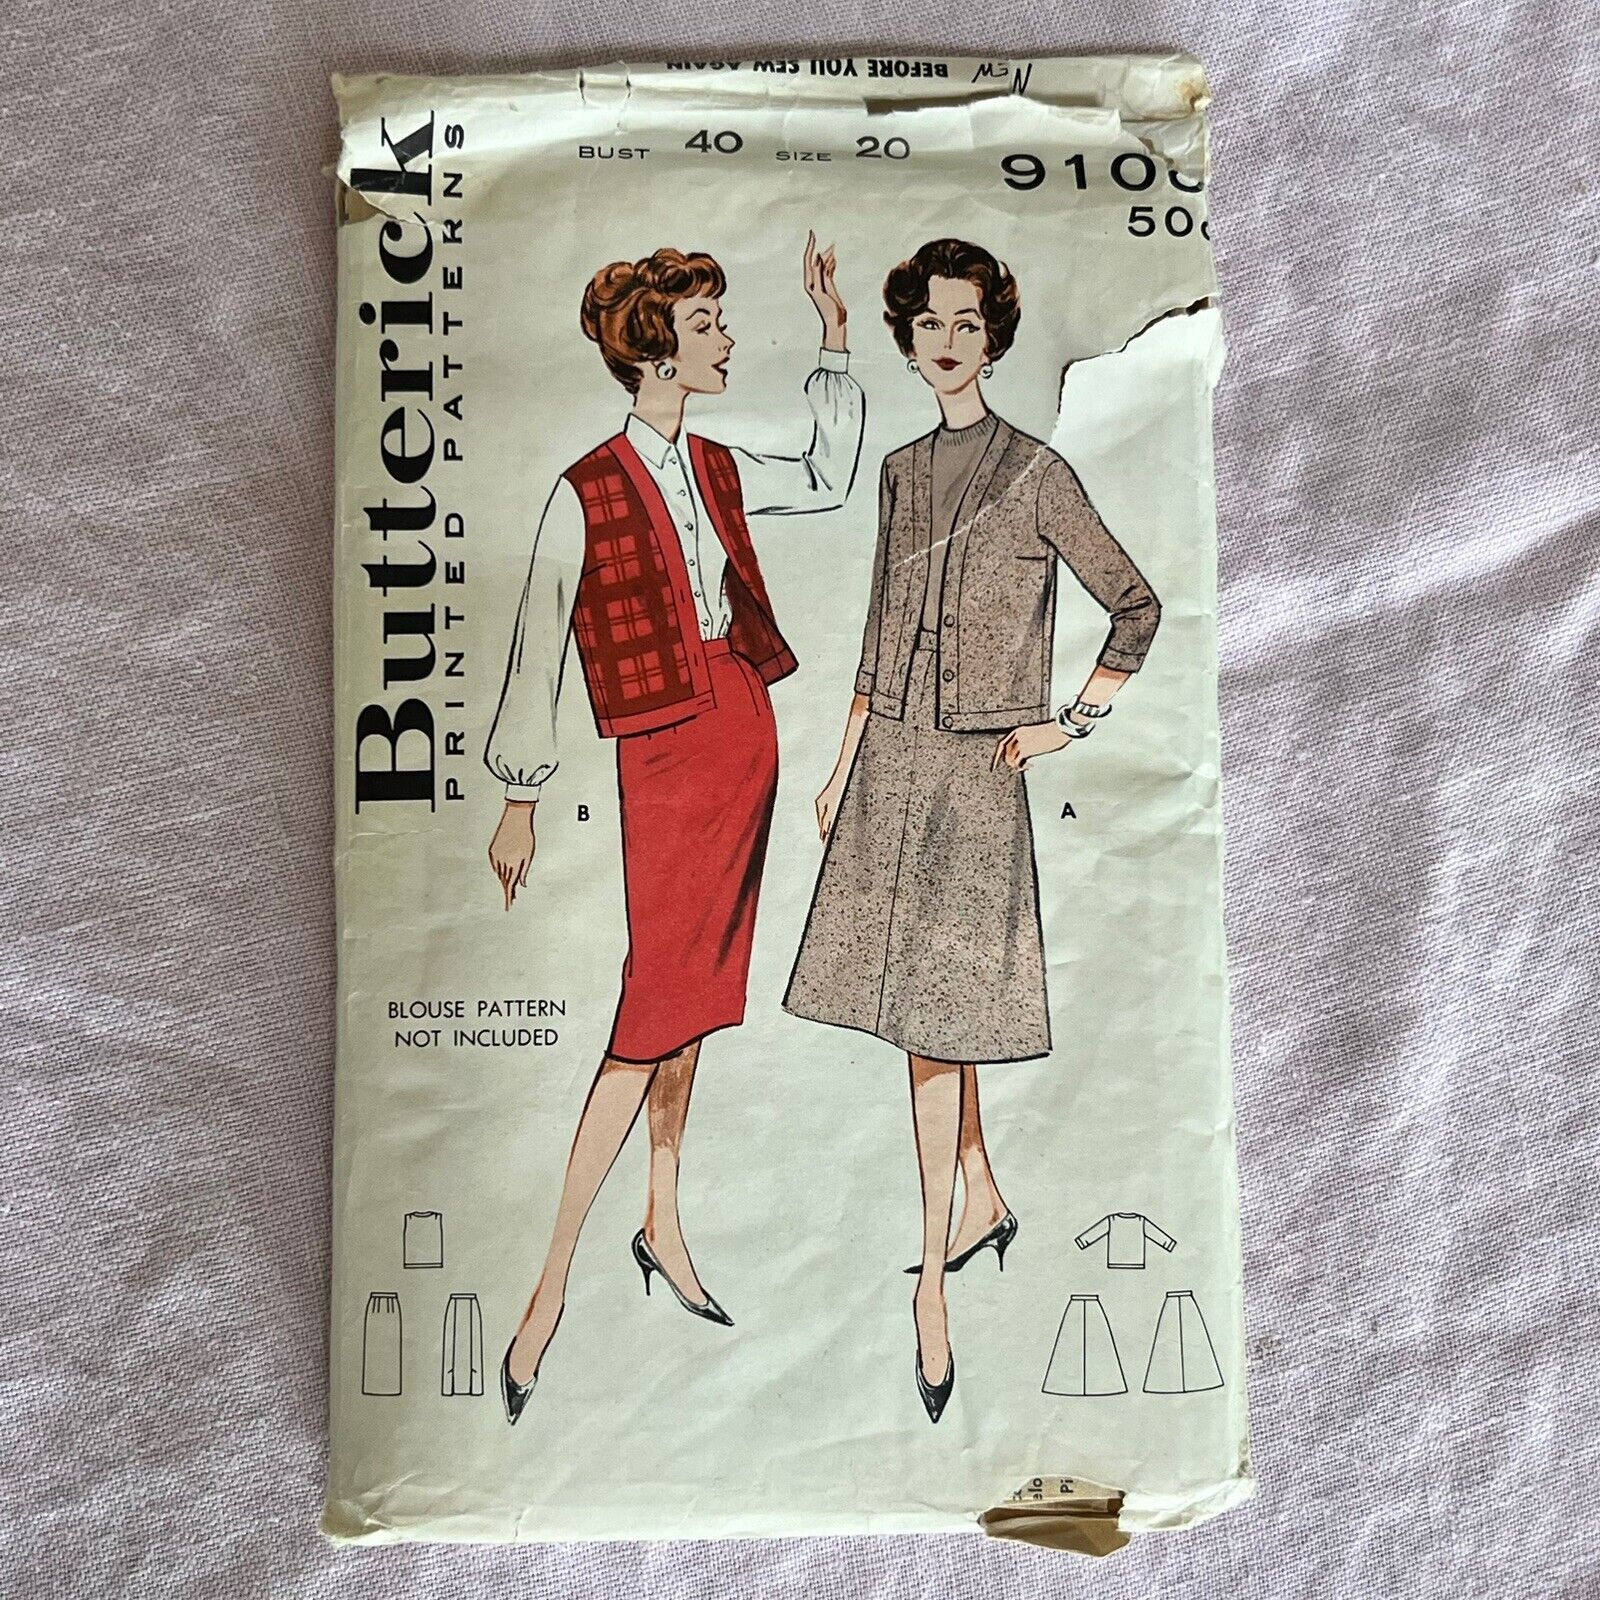 Butterick 9106 Size 20 Vintage Sewing Pattern 1950’s Coordinates Skirt Vest